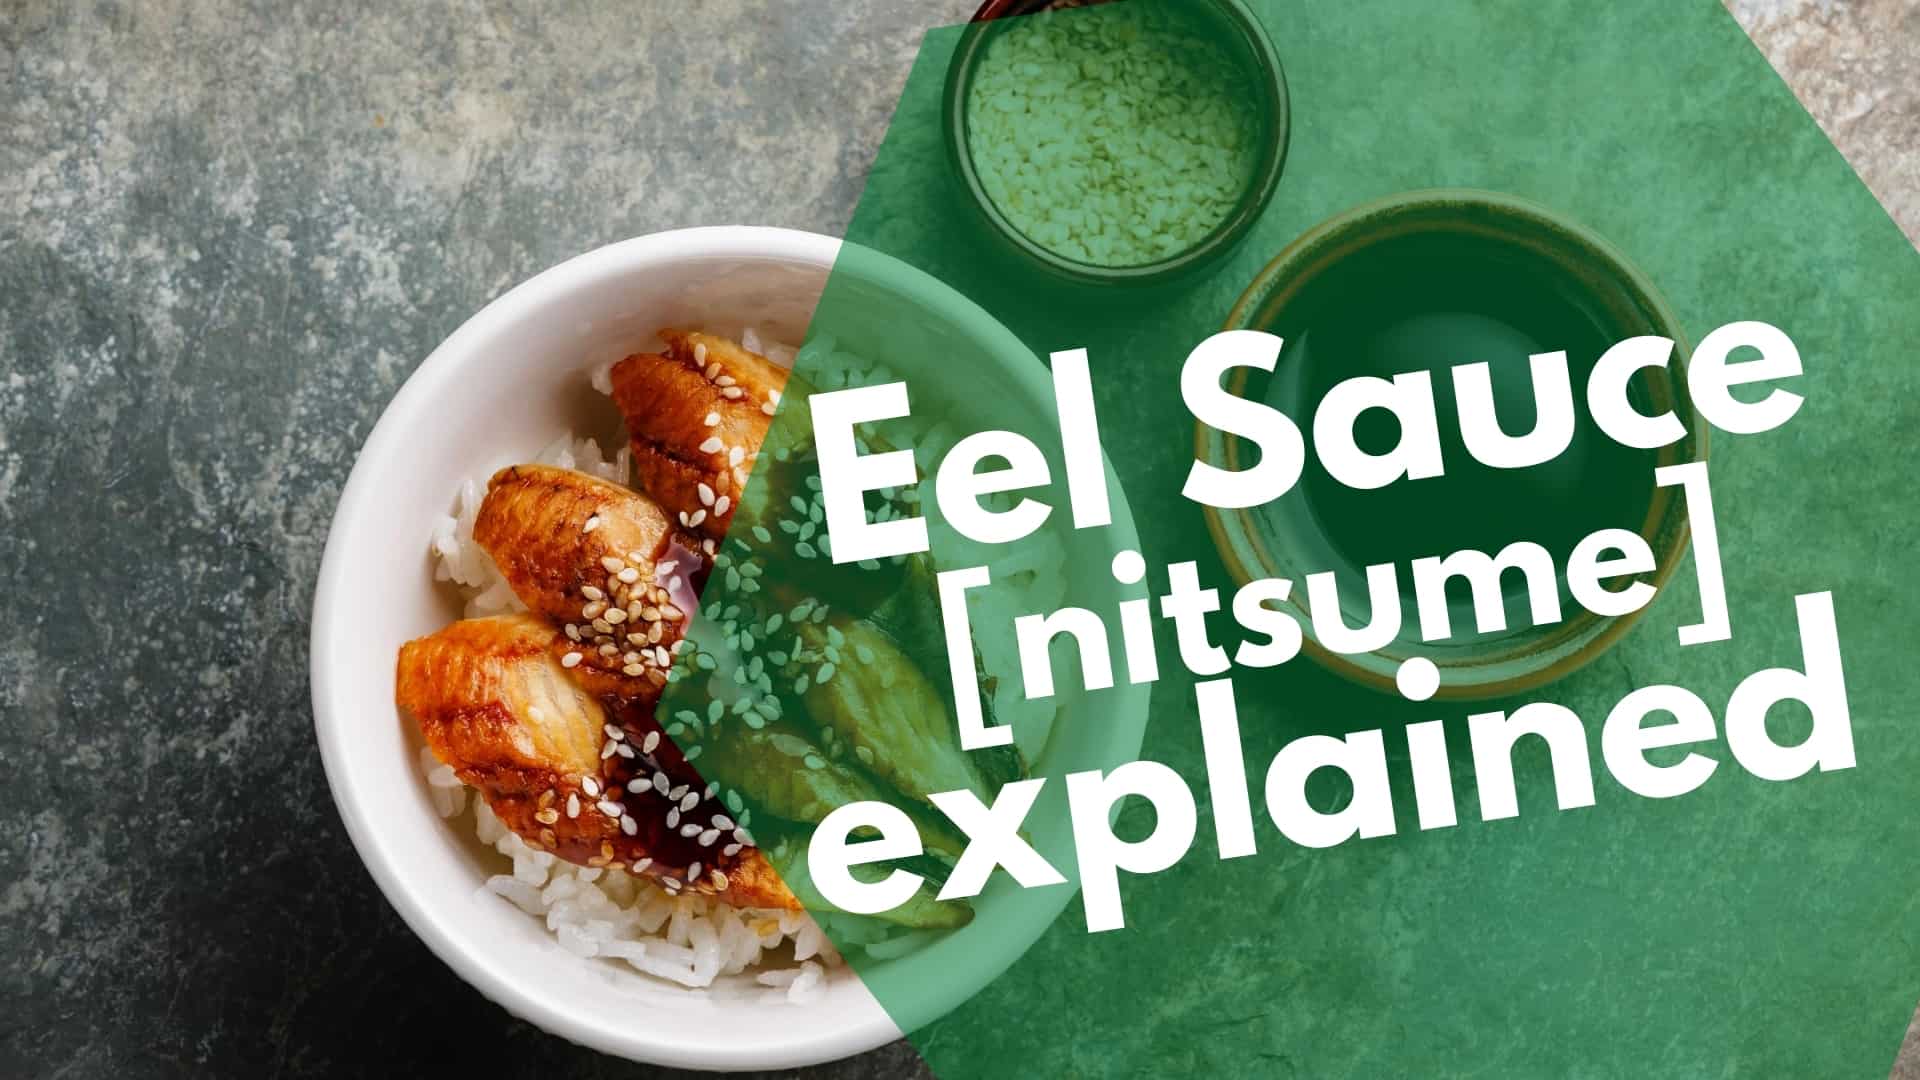 Eel Sauce nitsume explained